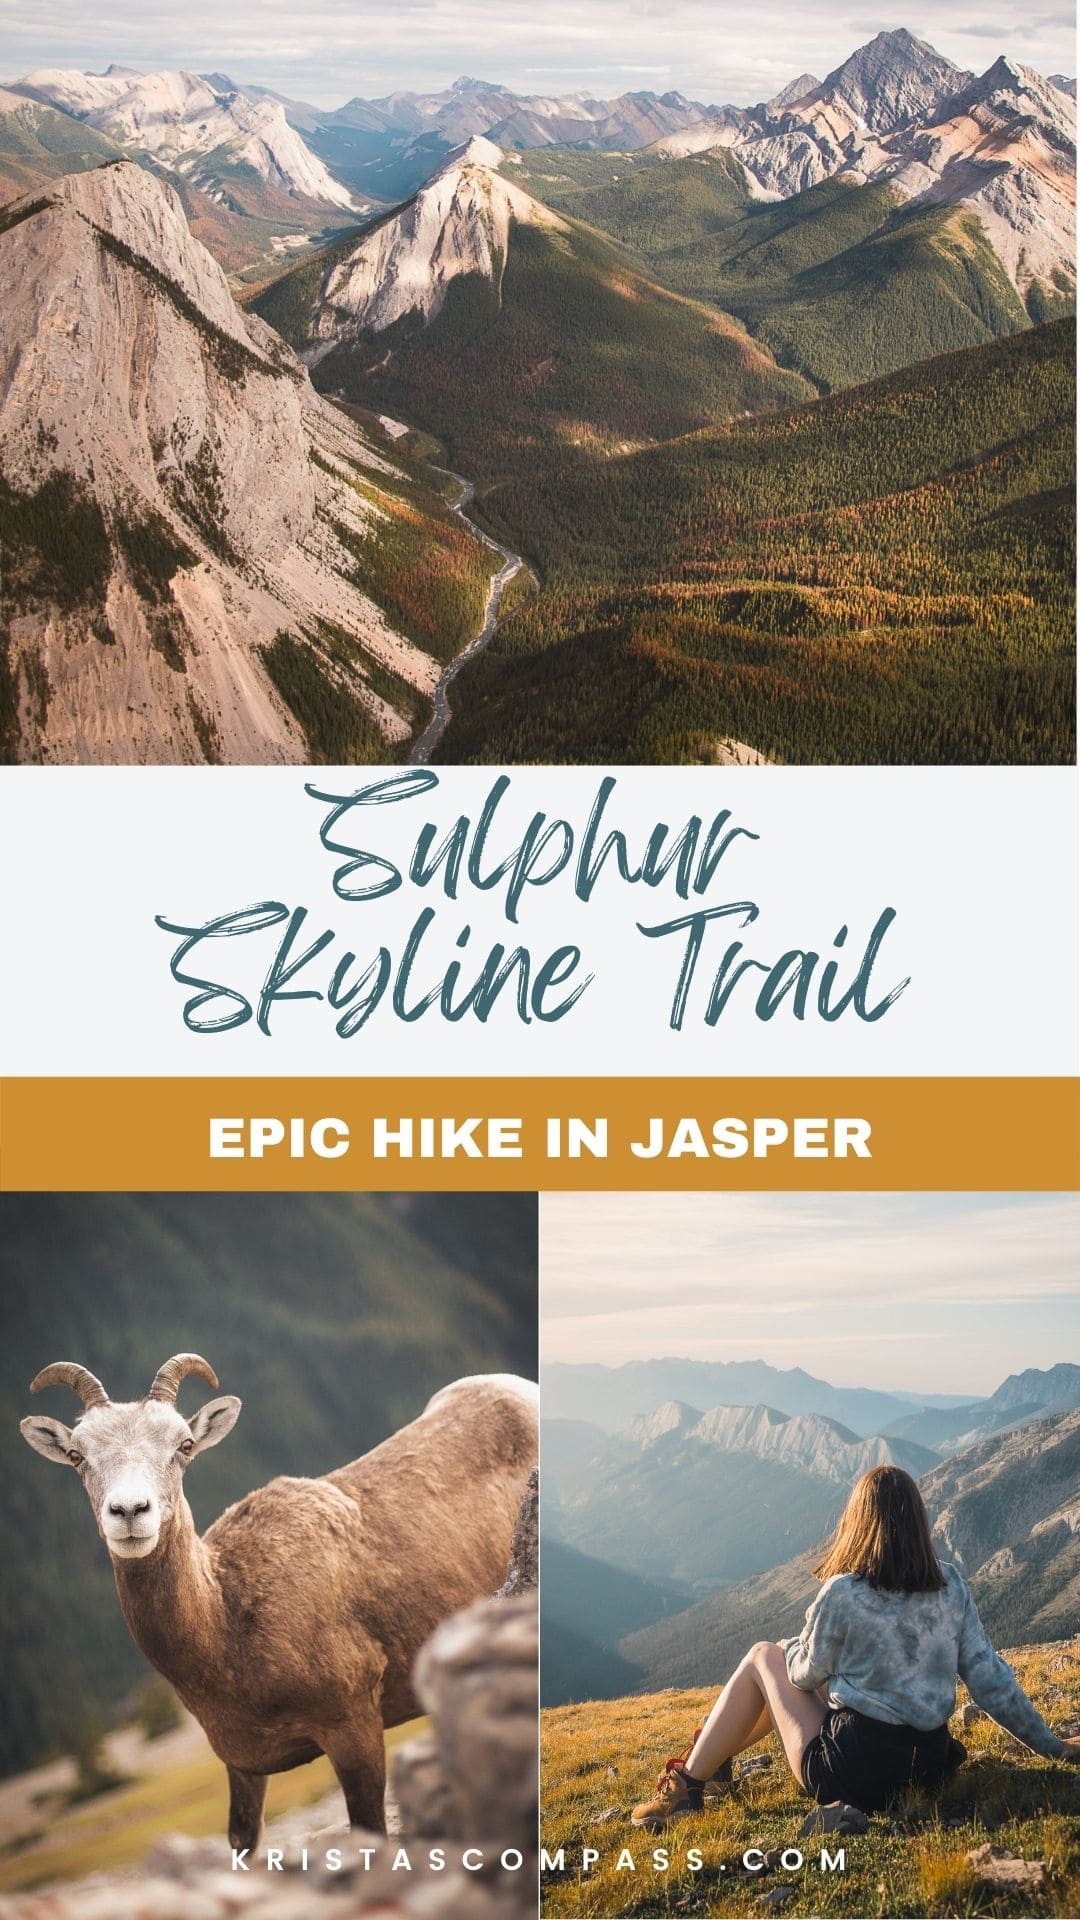 most beautiful hike in jasper national park, best hikes in jasper national park, hiking sulphur skyline